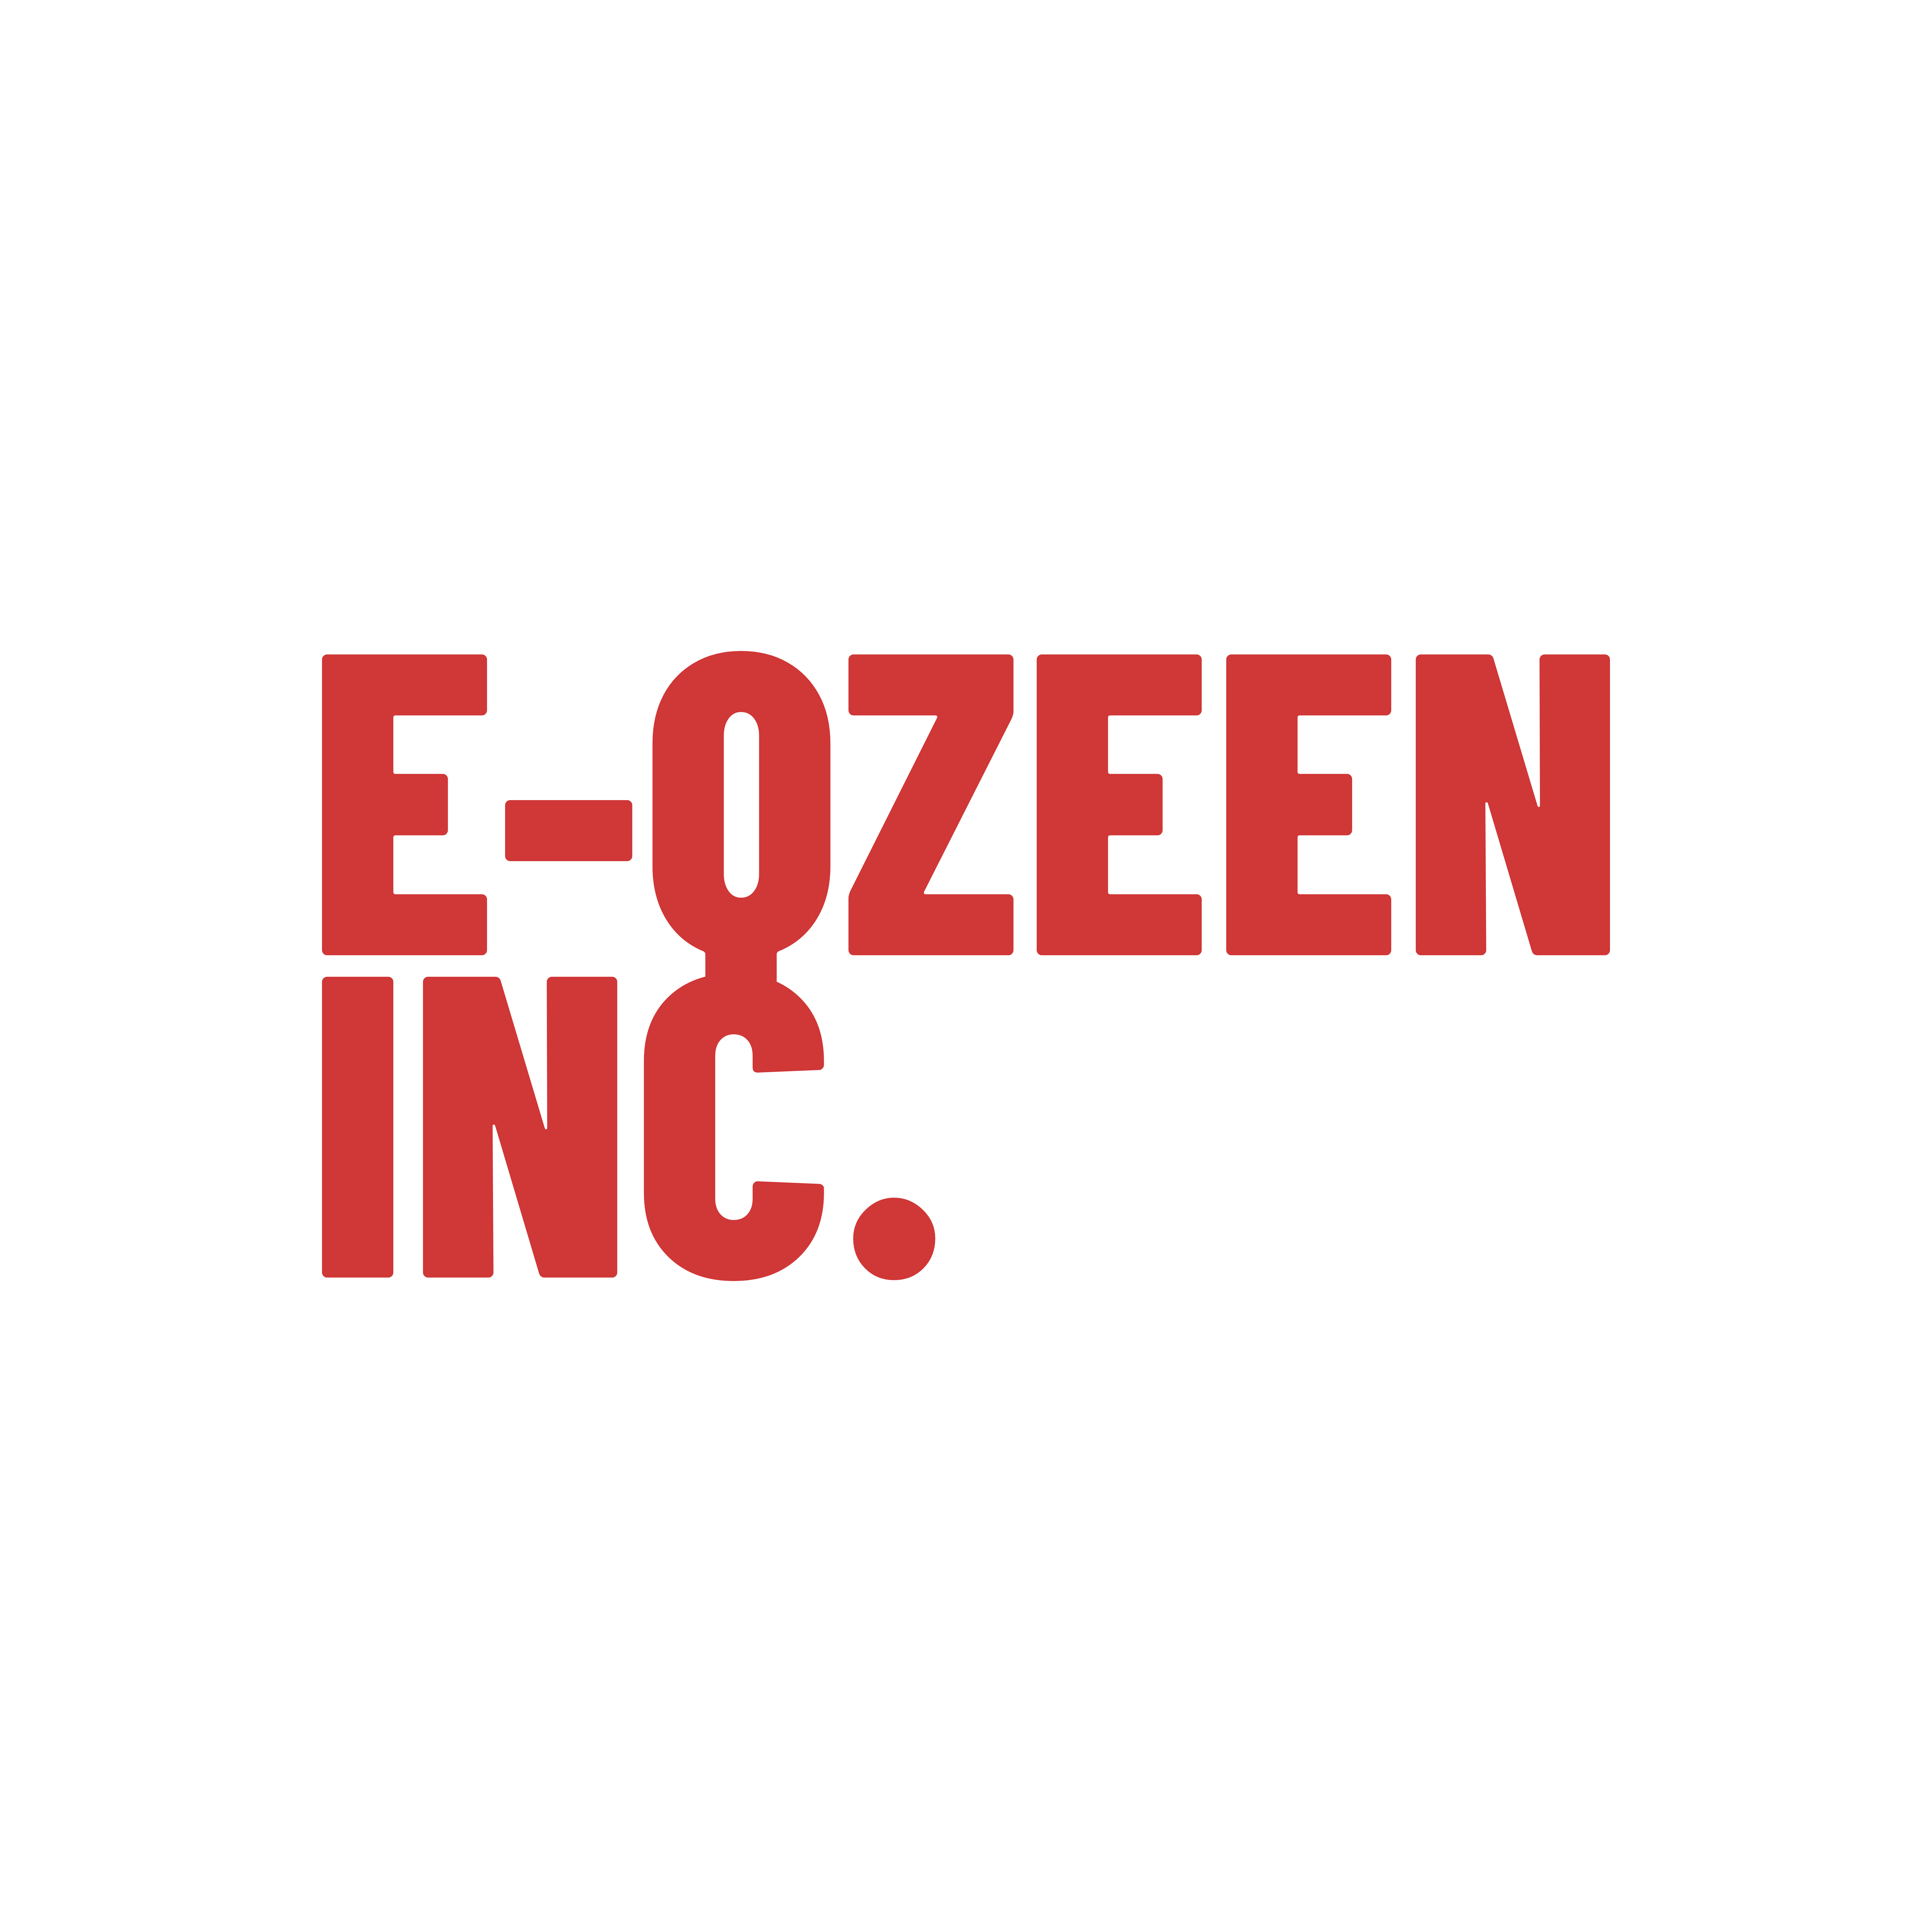 EQZEEN INC Logo